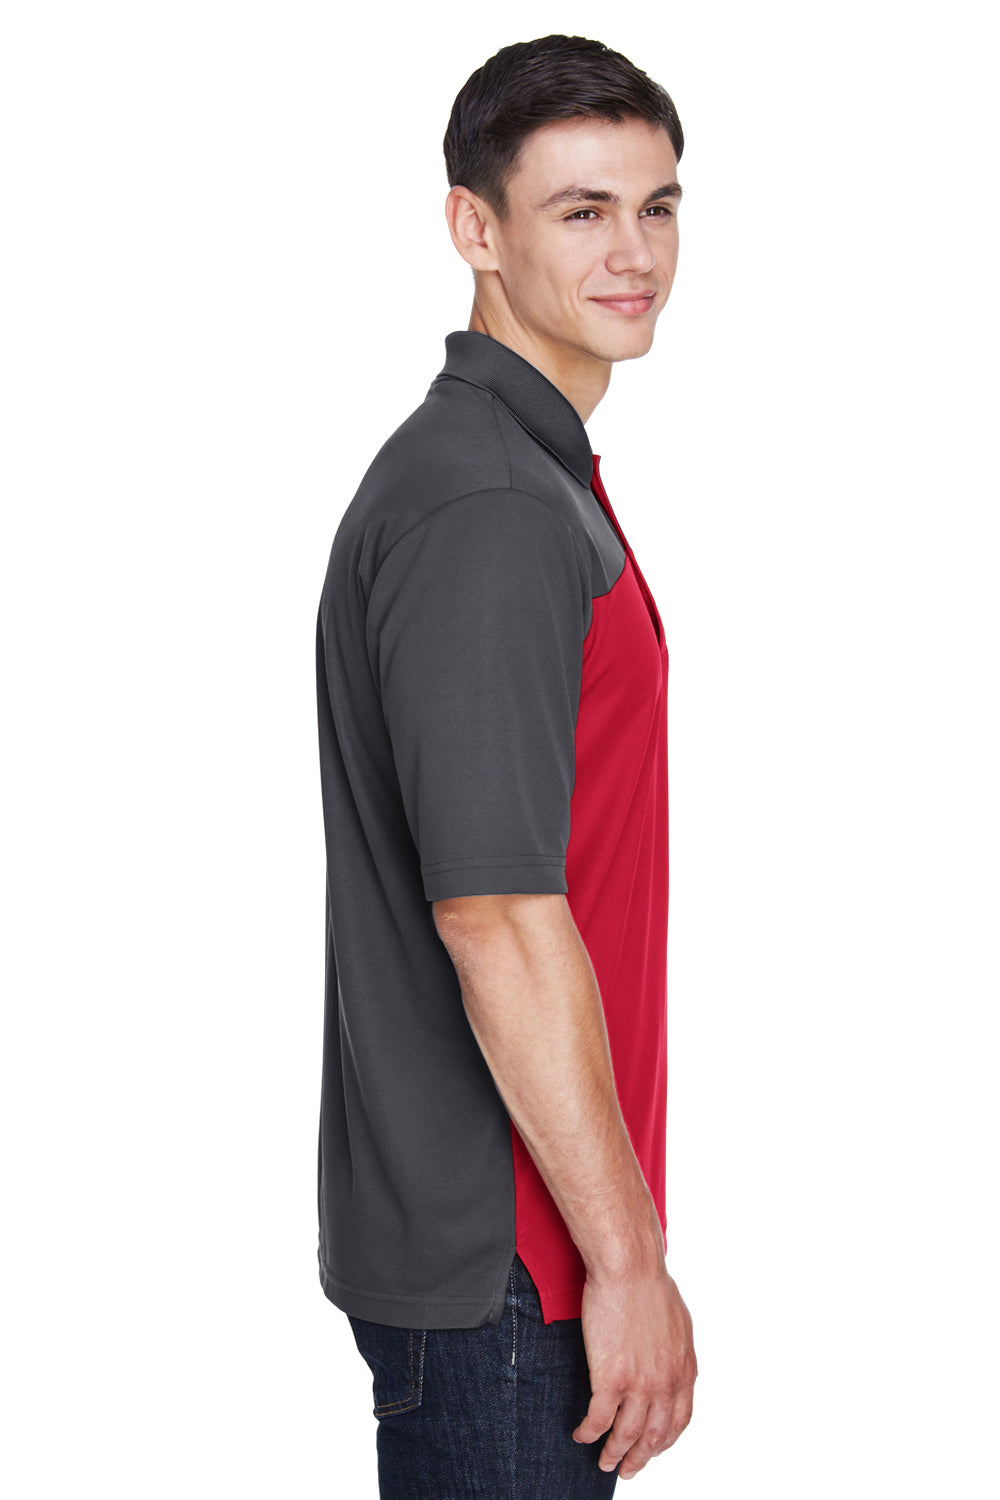 Core 365 CE101 Mens Balance Performance Moisture Wicking Short Sleeve Polo Shirt Red/Grey Side